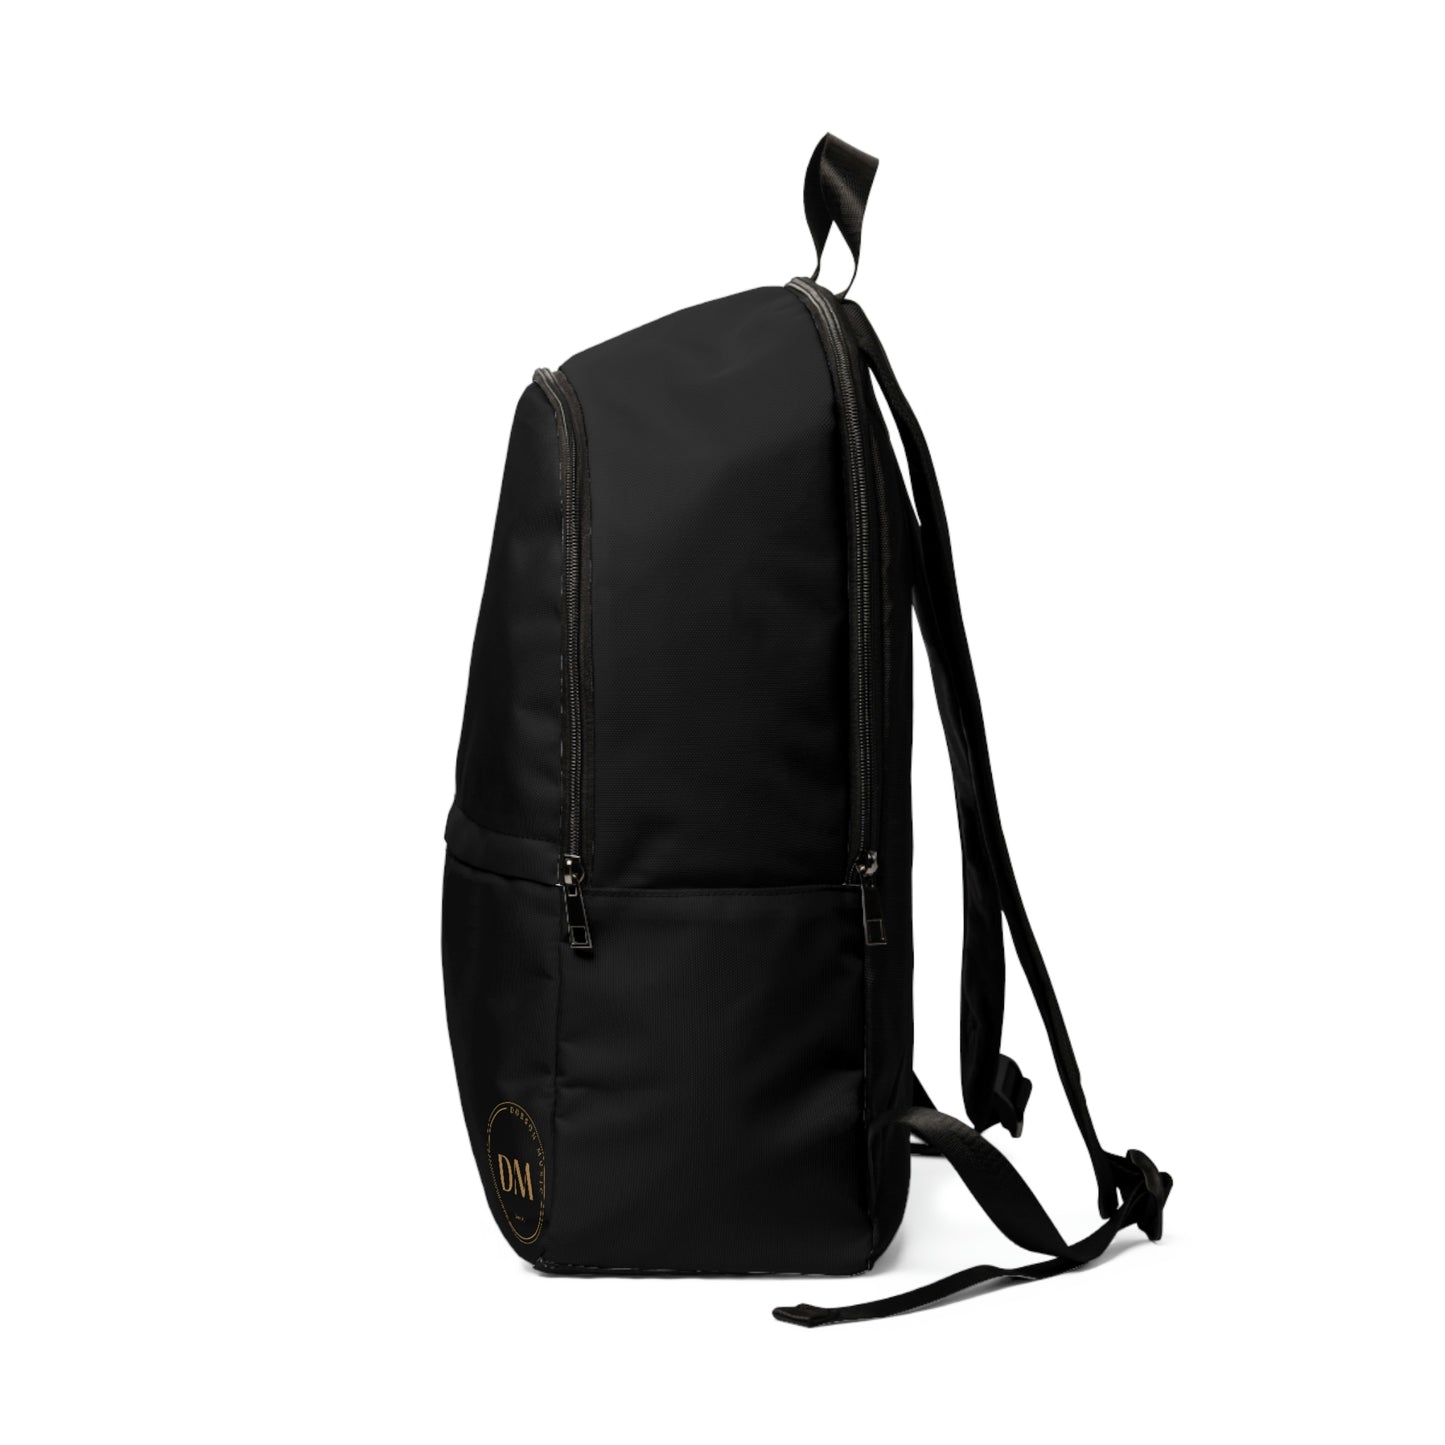 DM Unisex Fabric Backpack - Black